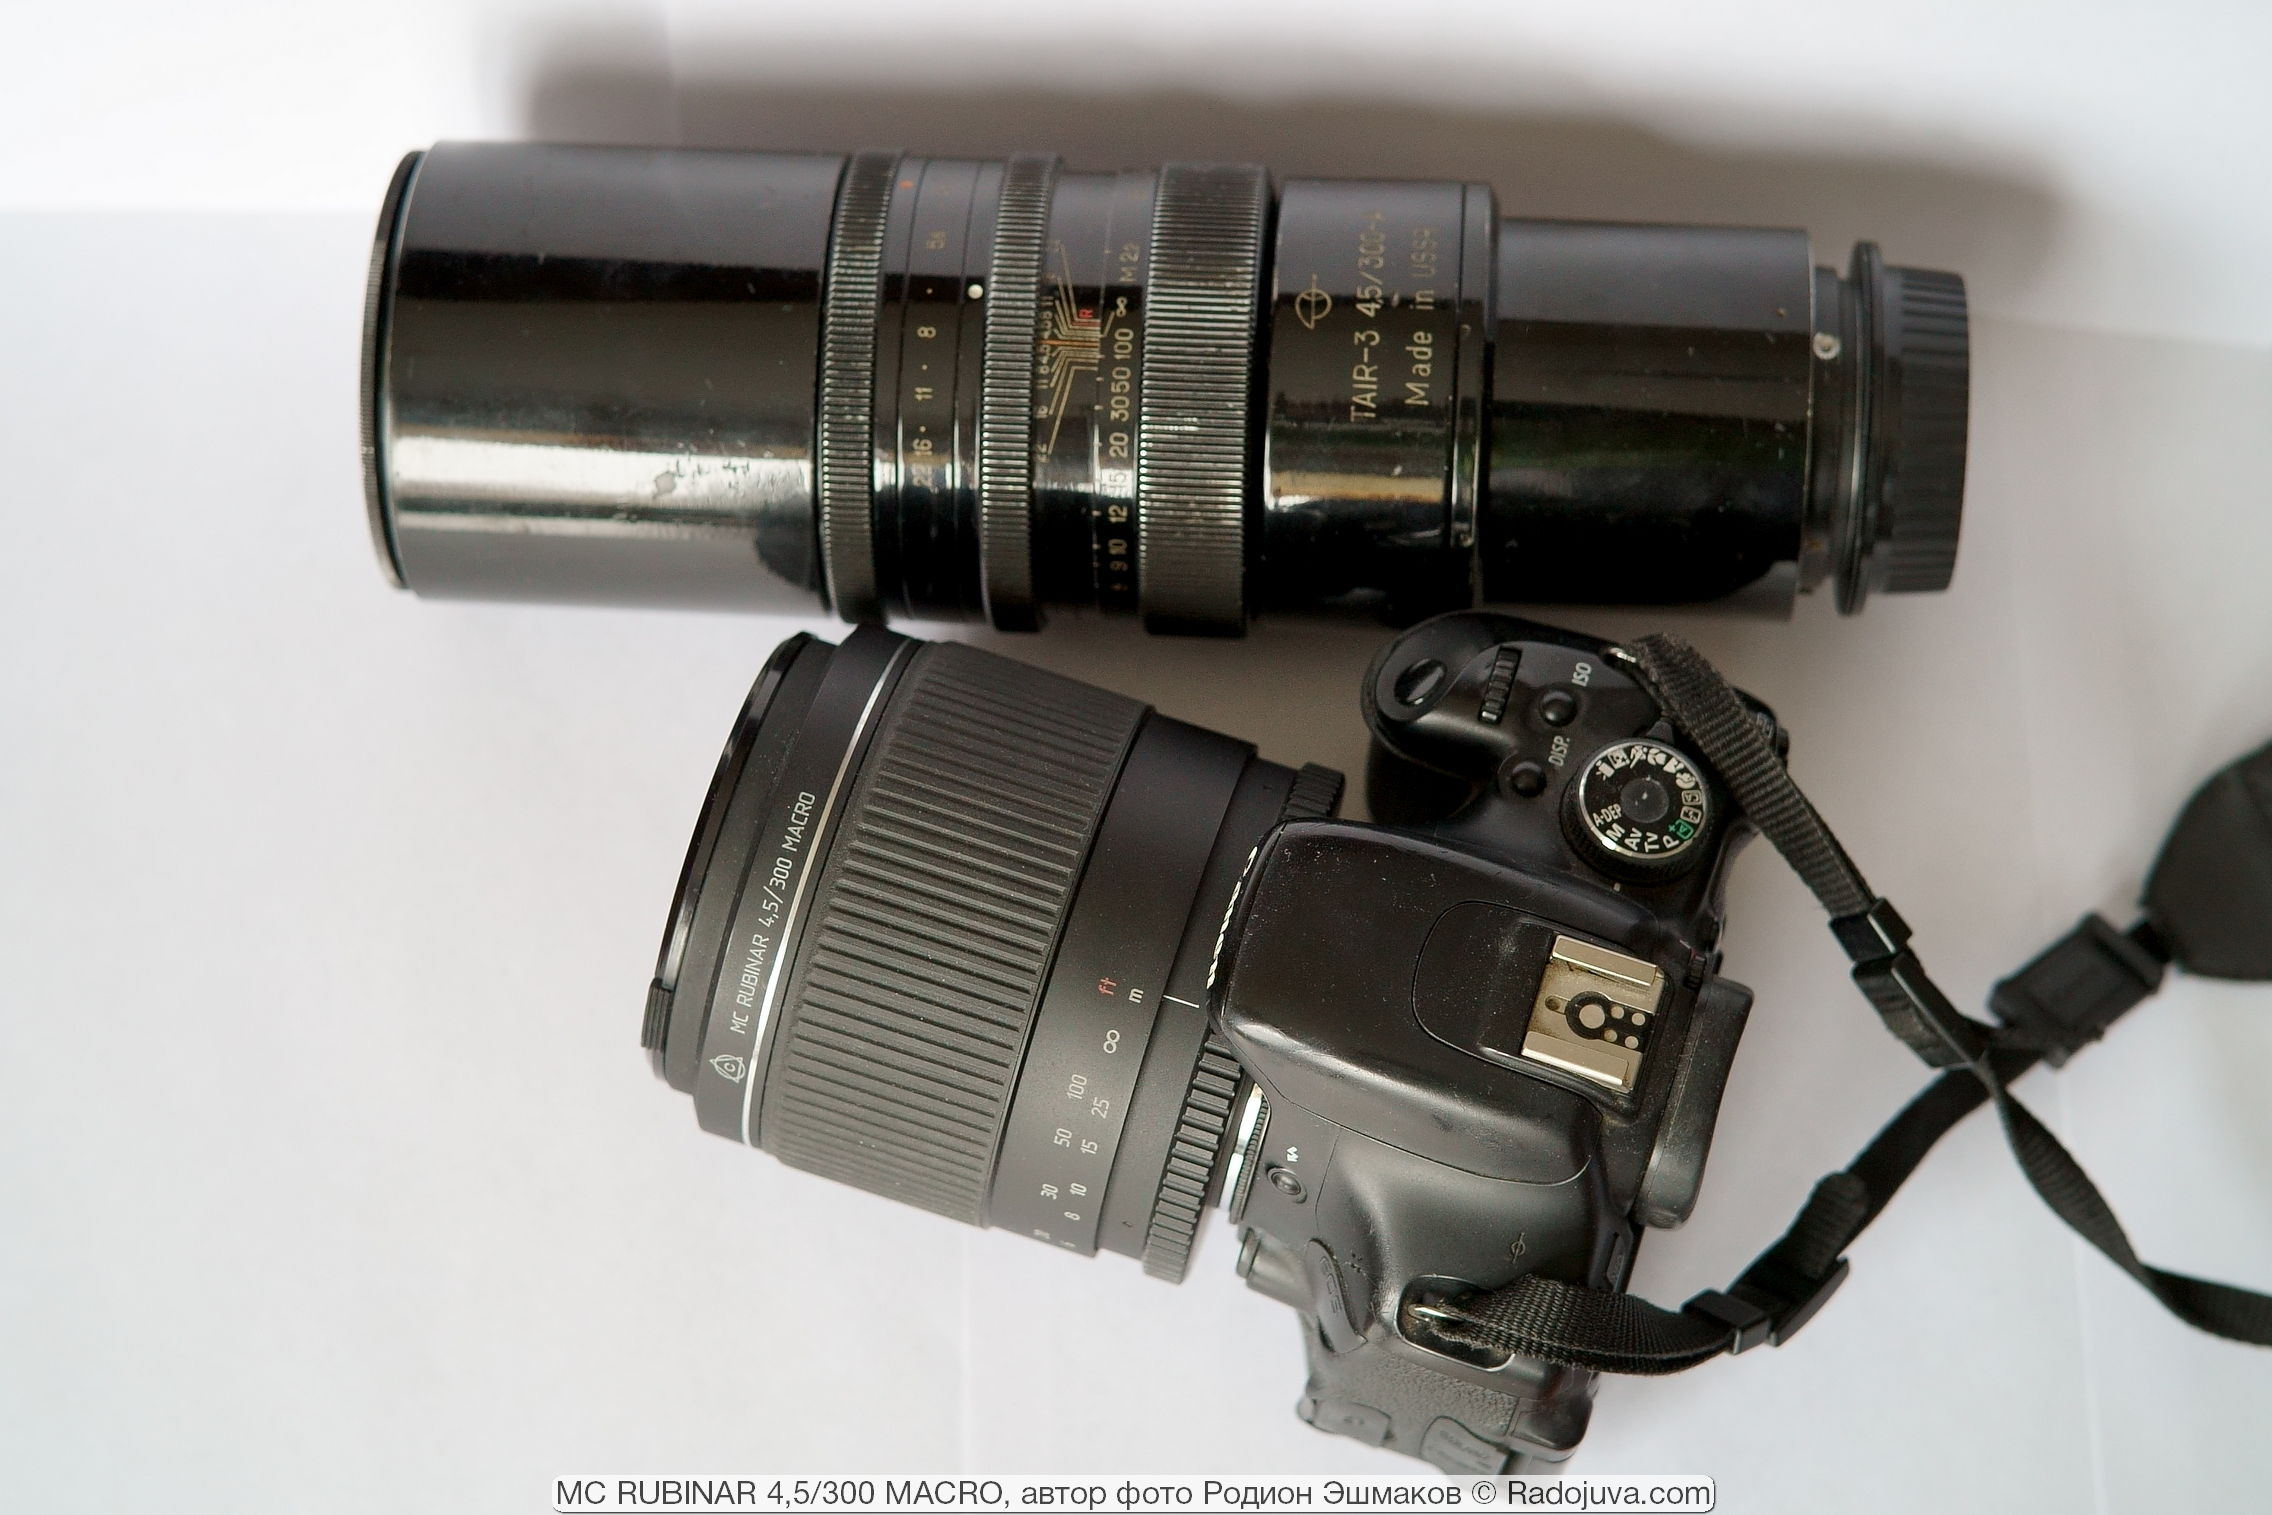 Линзовый объектив Таир-3А 300/4.5 и Рубинар 300/4.5 (на камере Canon 600D). Рубинар имеет почти втрое меньшую длину.